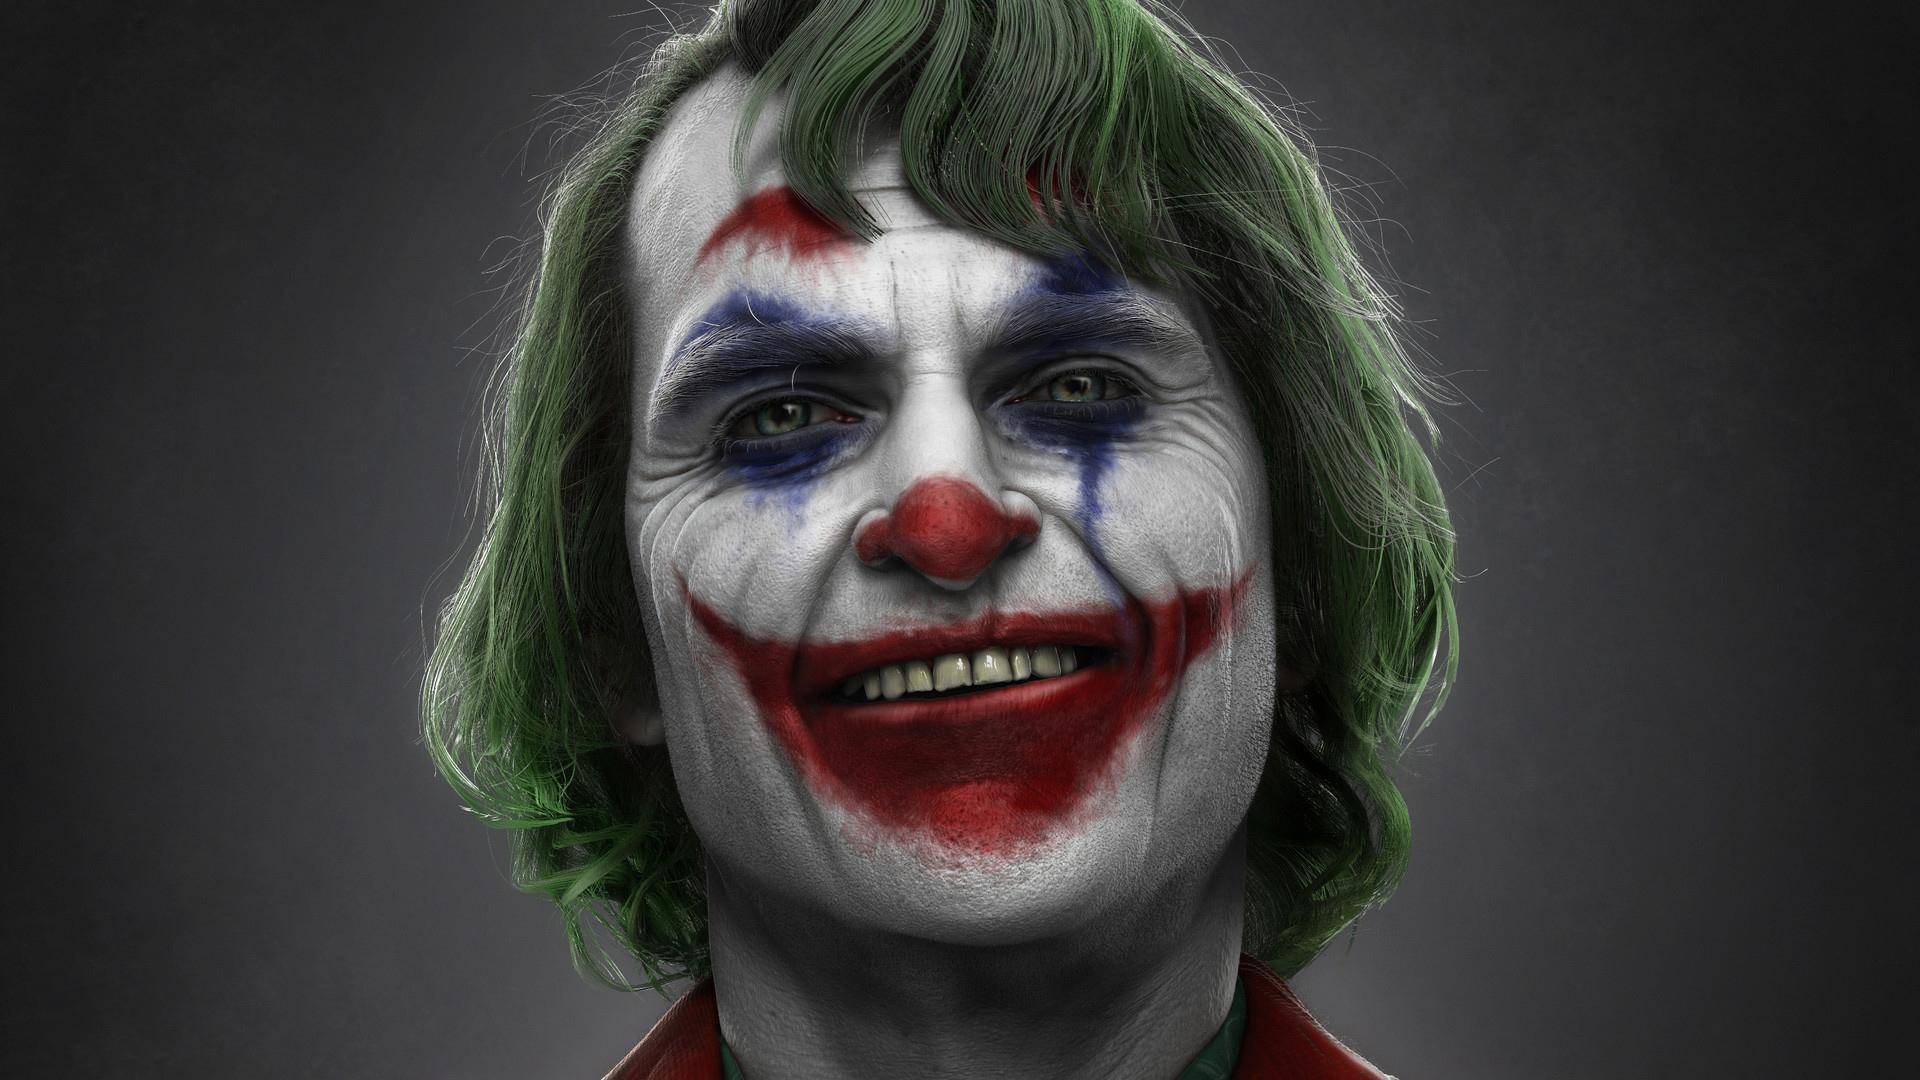 Joker 2019 Wallpaper, Joaquin Phoenix Confirmed For Standalone